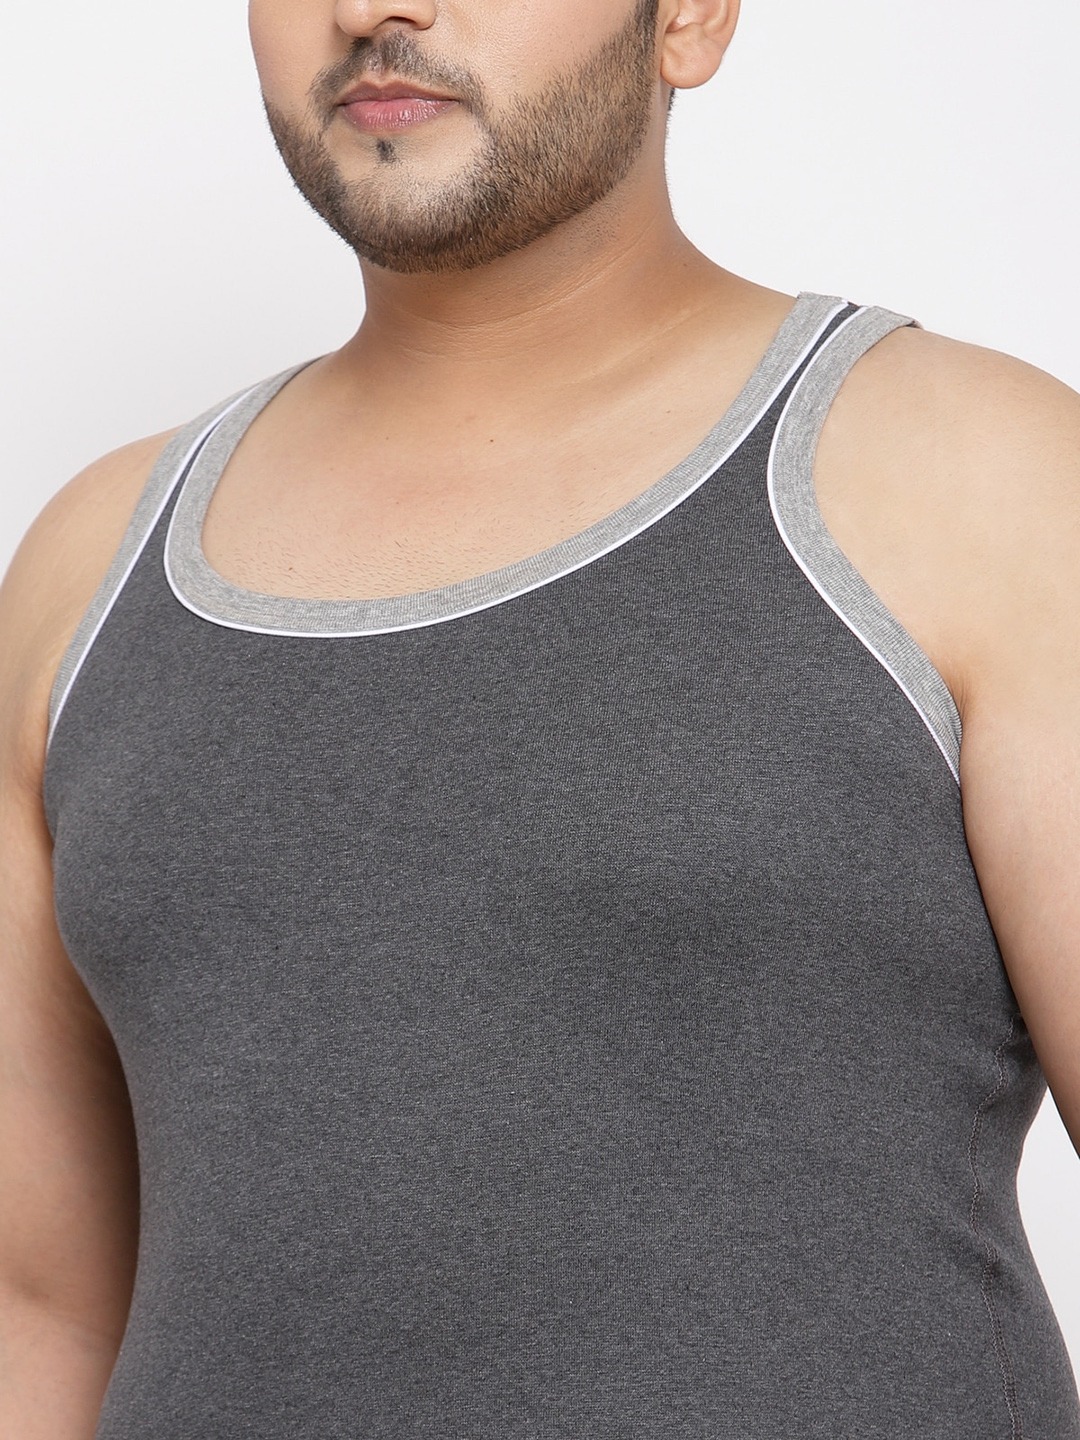 Clothing Innerwear Vests | plusS Men Plus Size Charcoal Grey Solid Innerwear Vest MSD9908 - SI99225